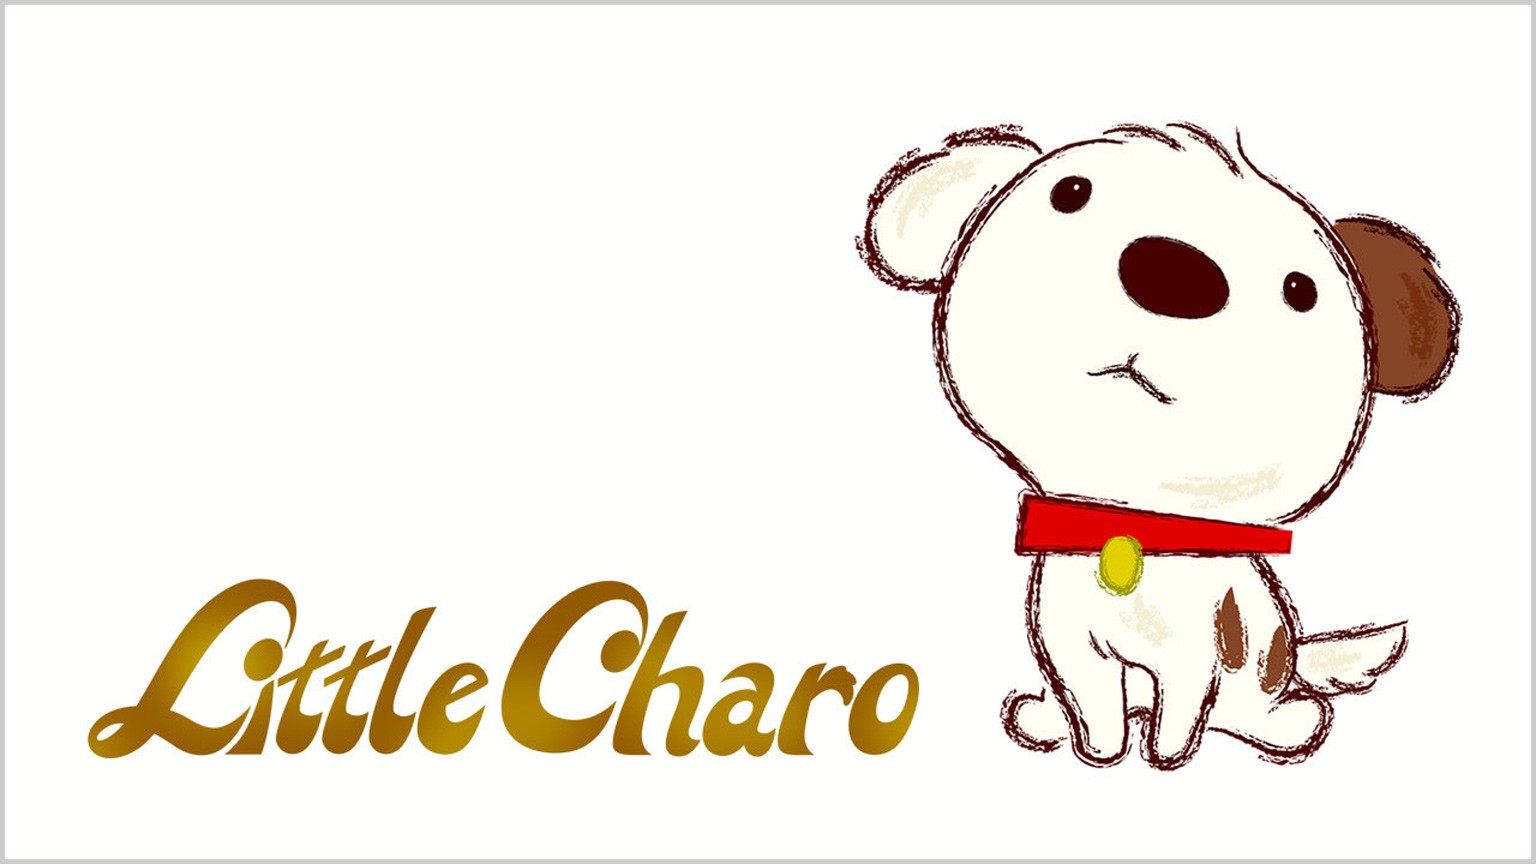 Little Charo